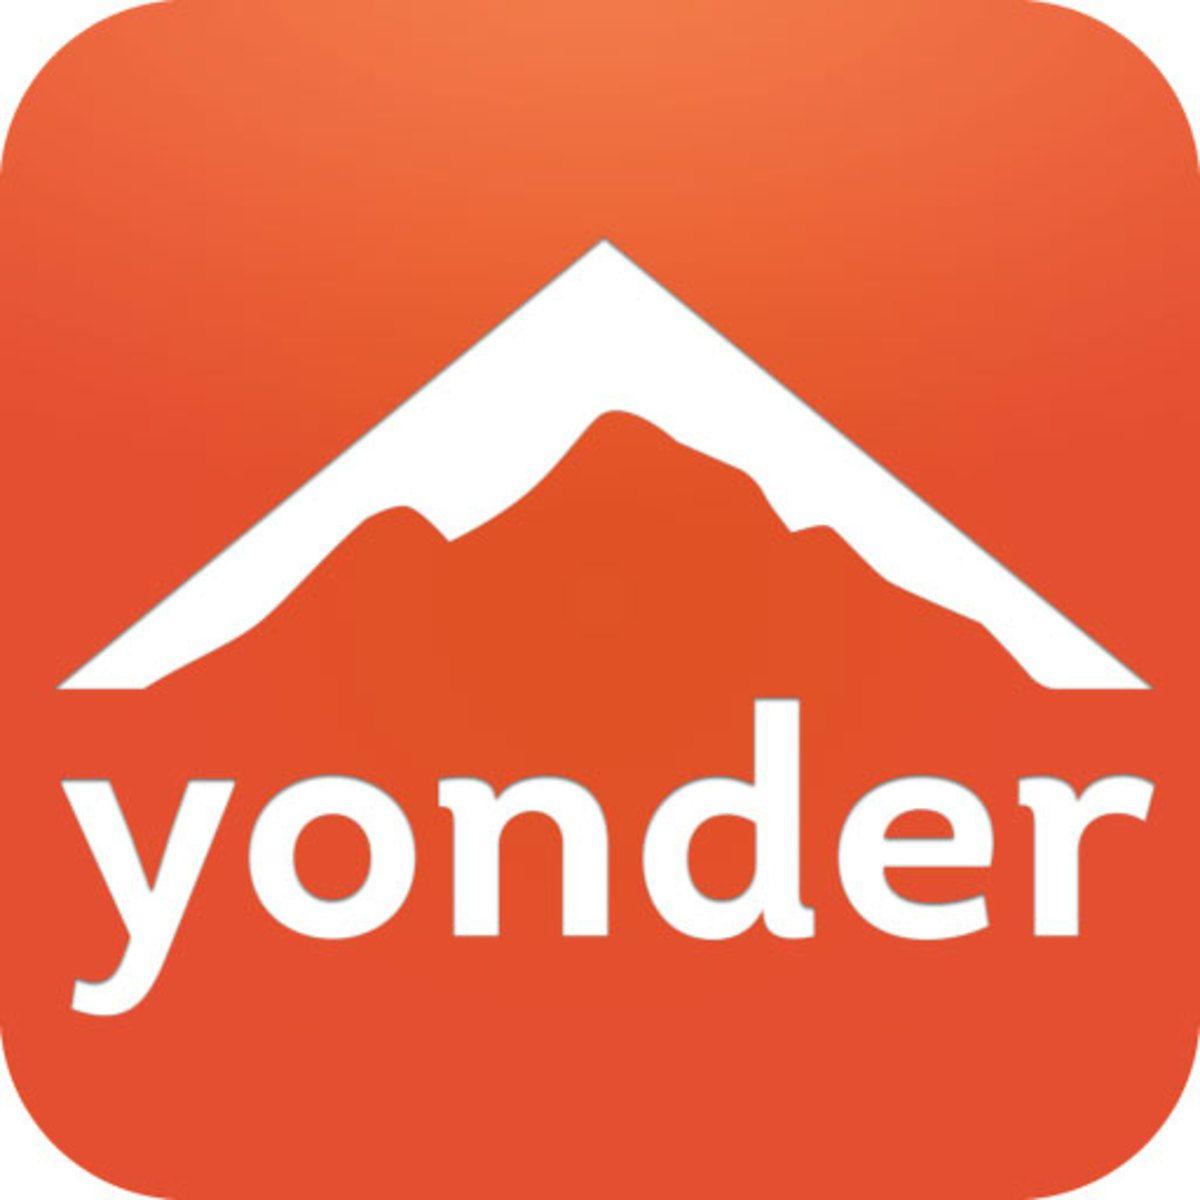 Yonder App Logo - Yonder 2.0 App Released for iOS 7